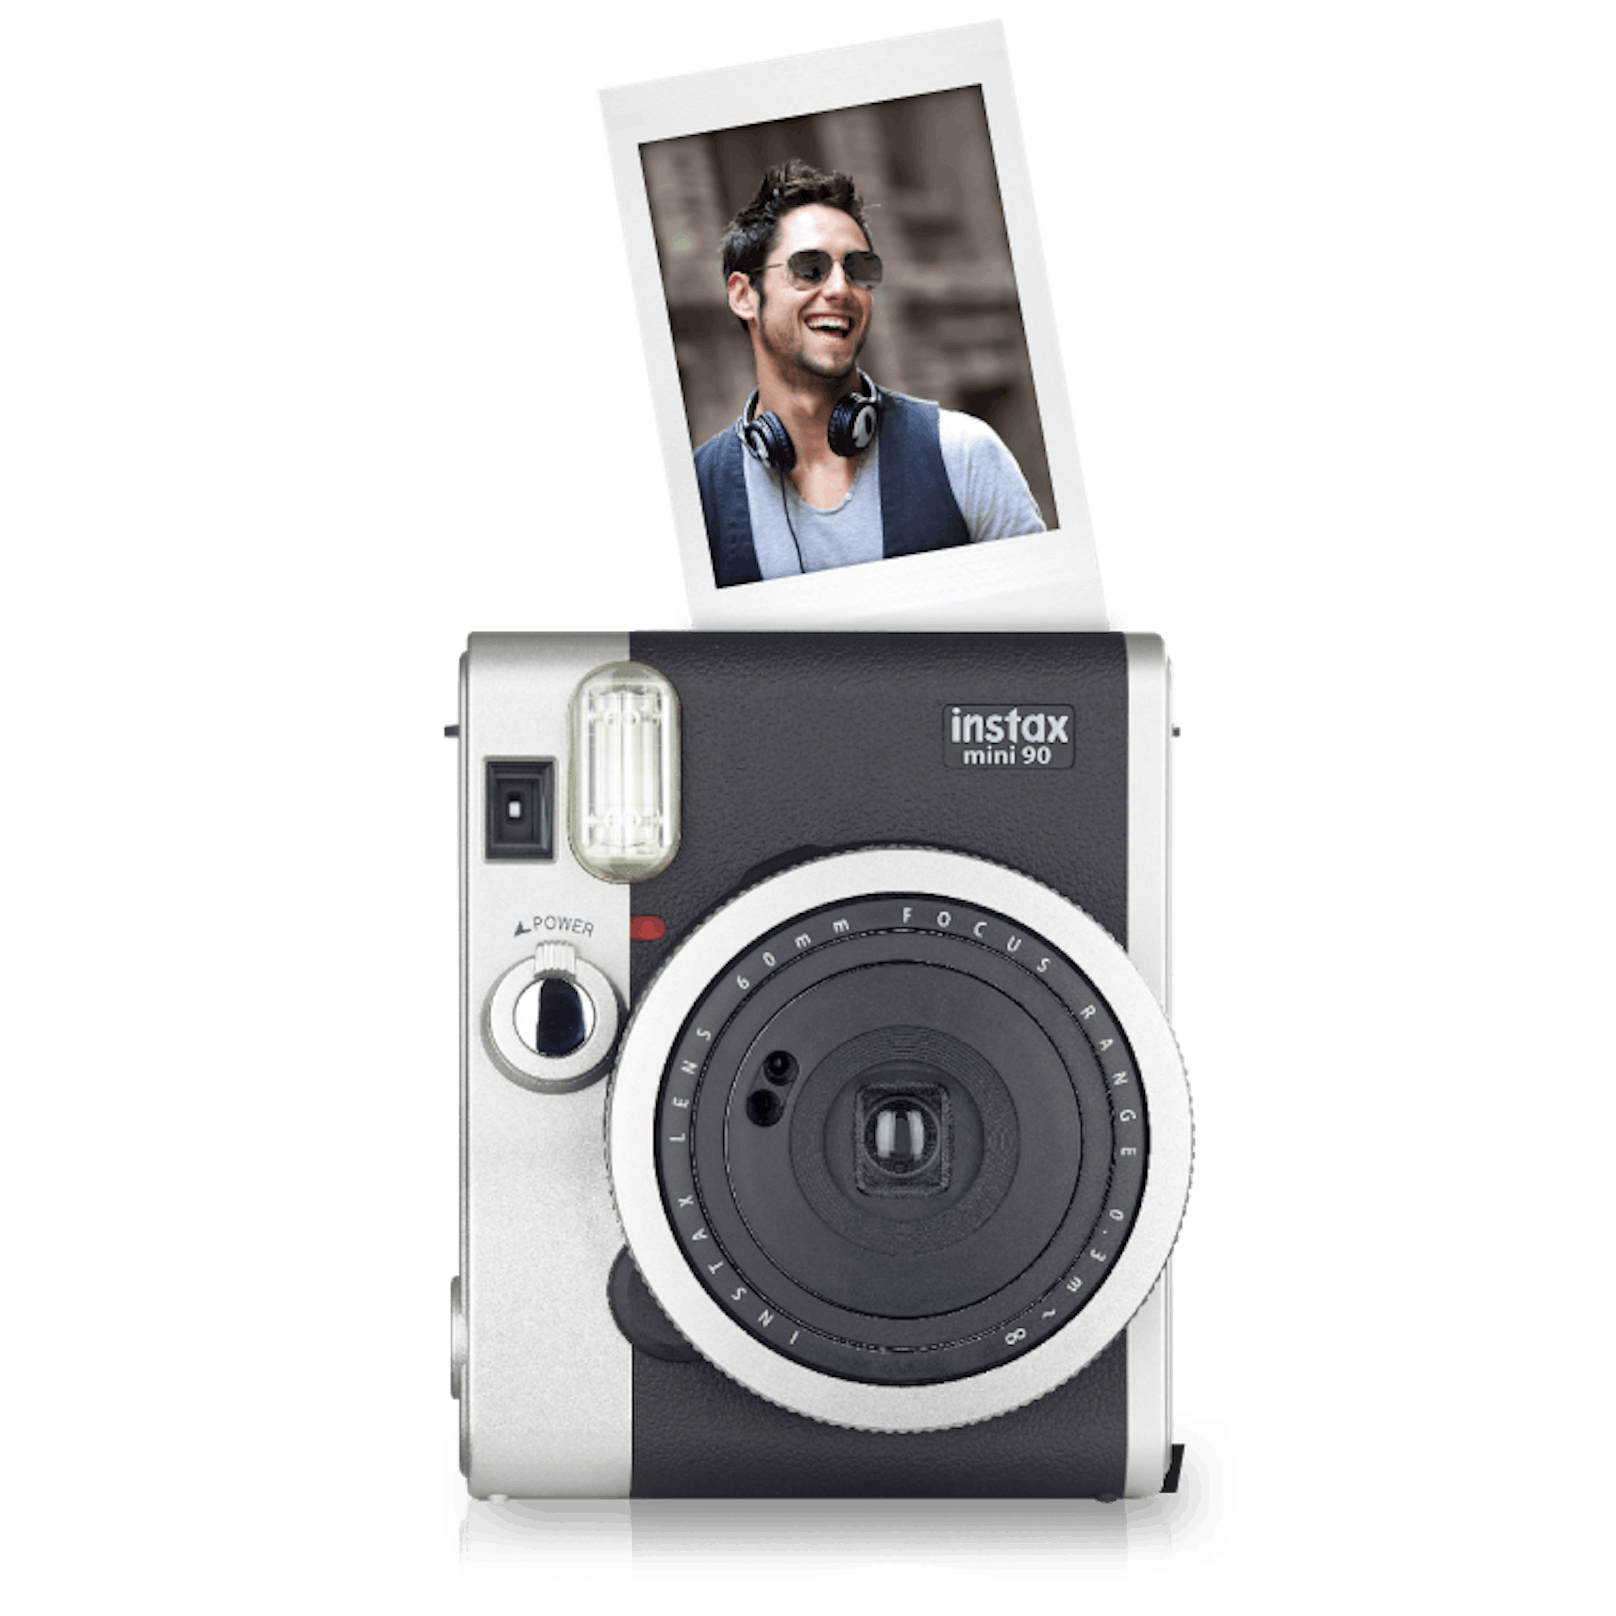 Sofortbildkamera "Instax Mini 90" von Fuji bei Media Markt um 149 Euro.